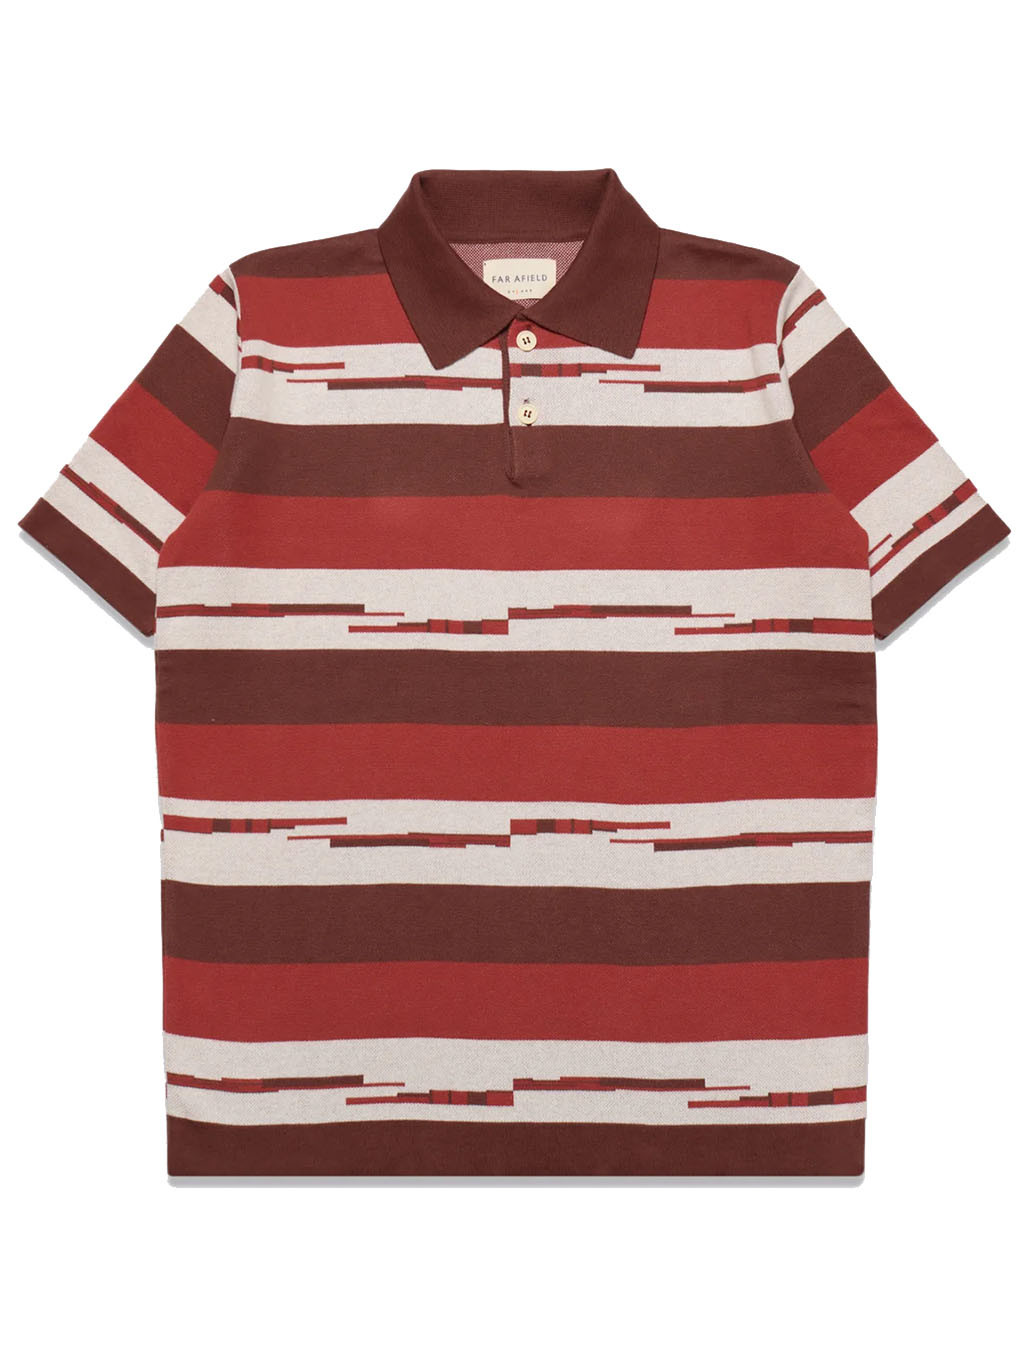 Far Afield Mens Stripe Polo Shirt AFKN557